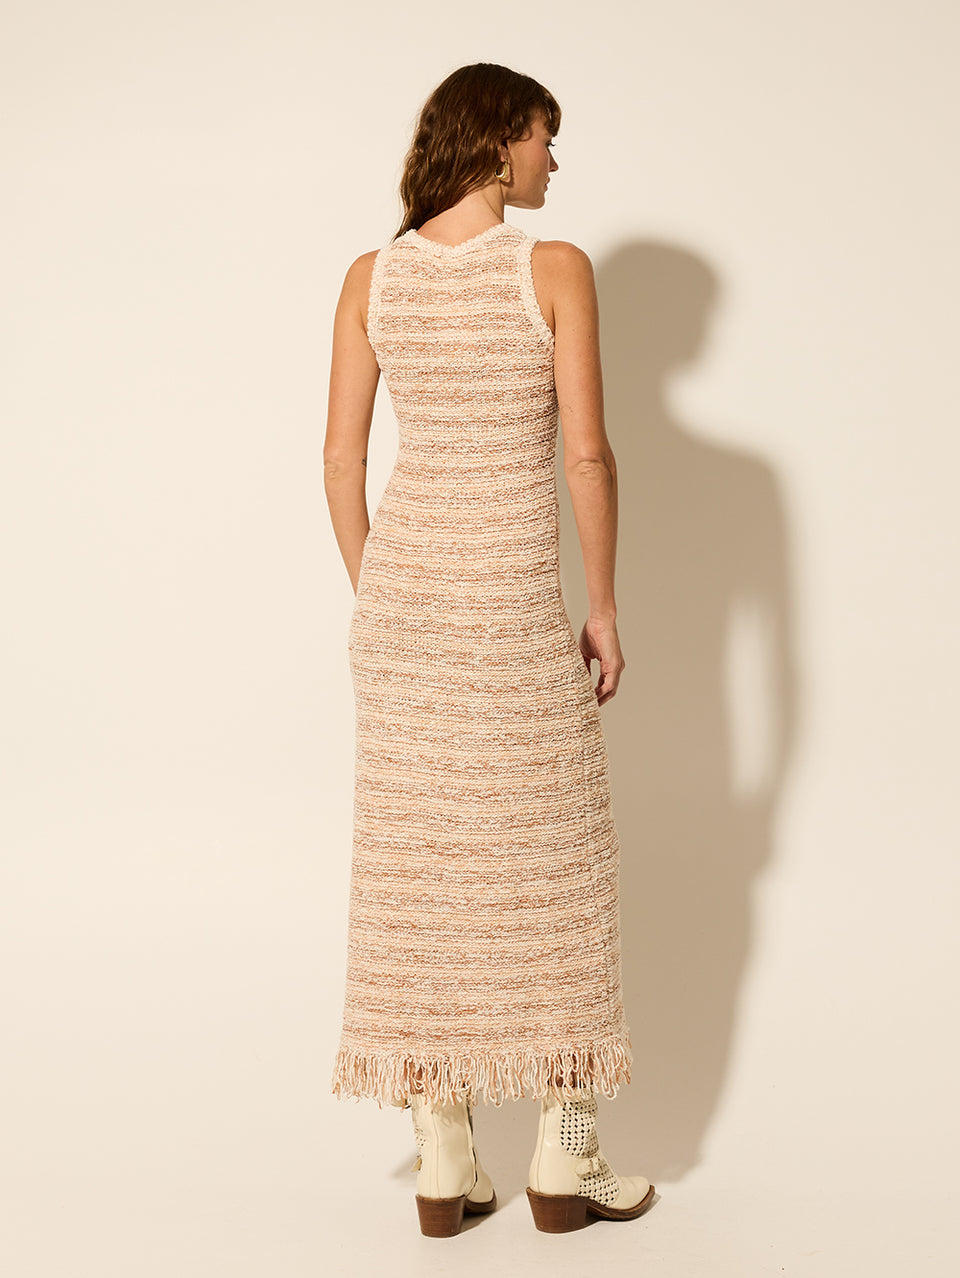 Luciana Knit Dress KIVARI | Model wears knit stripe dress back view